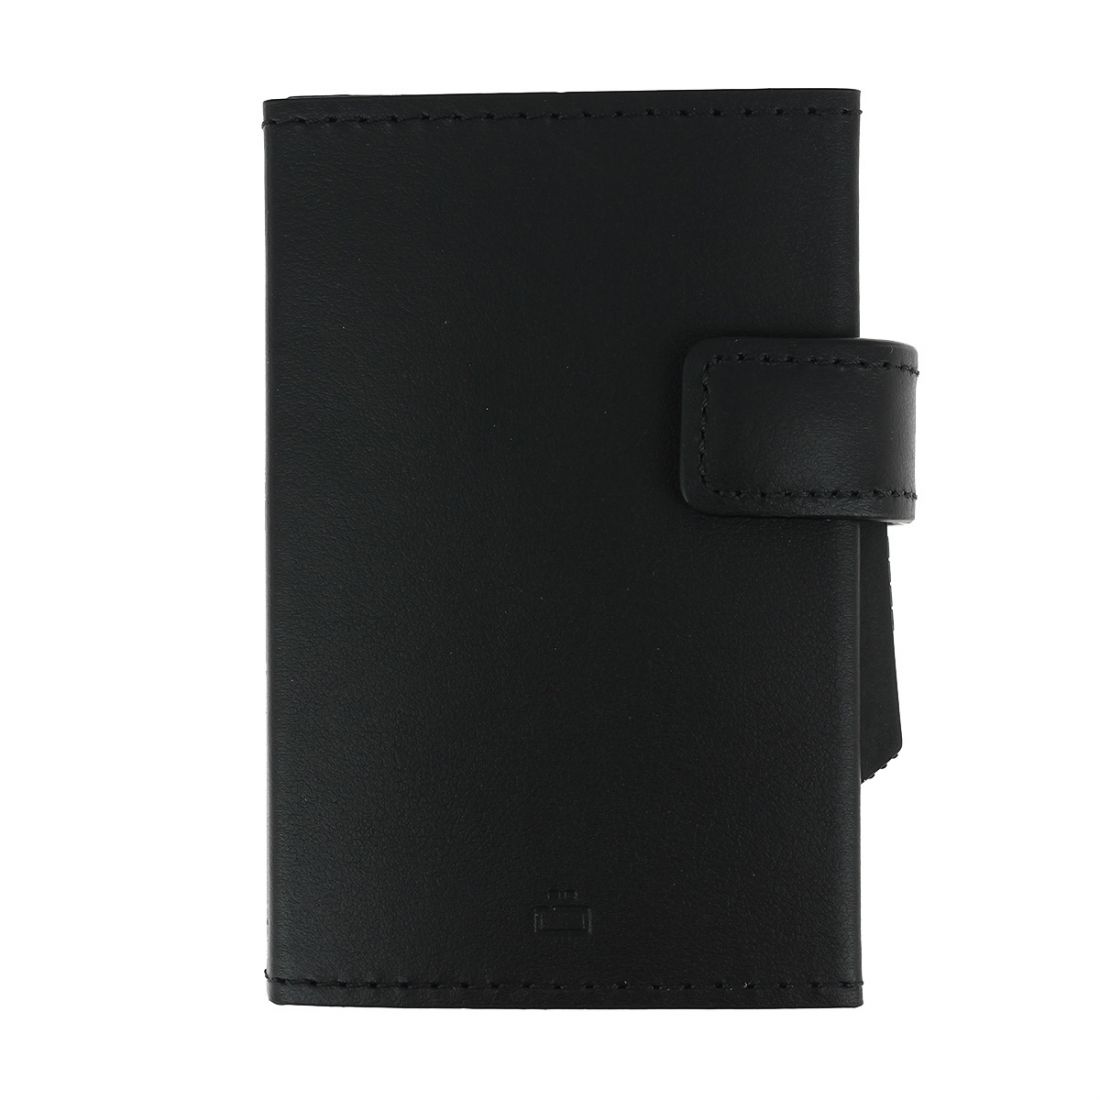 Porte carte Cascade, Aluminium et cuir noir alu argent, Ogon Design. - Noir  - | eBay